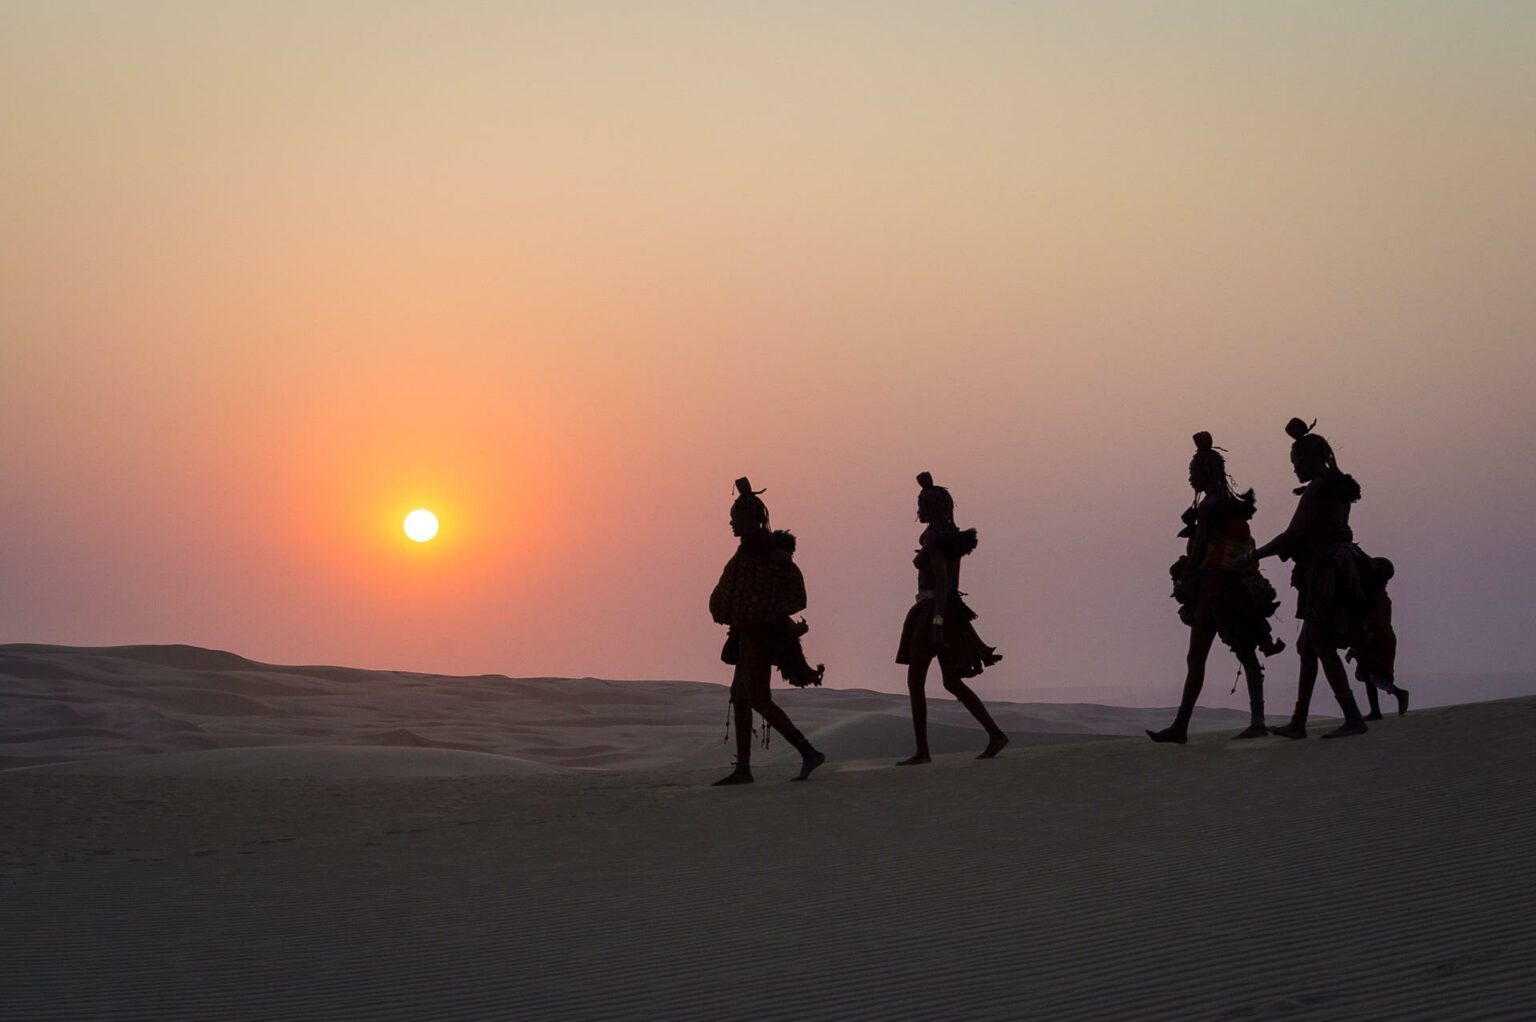 A group of people walking across a desert.